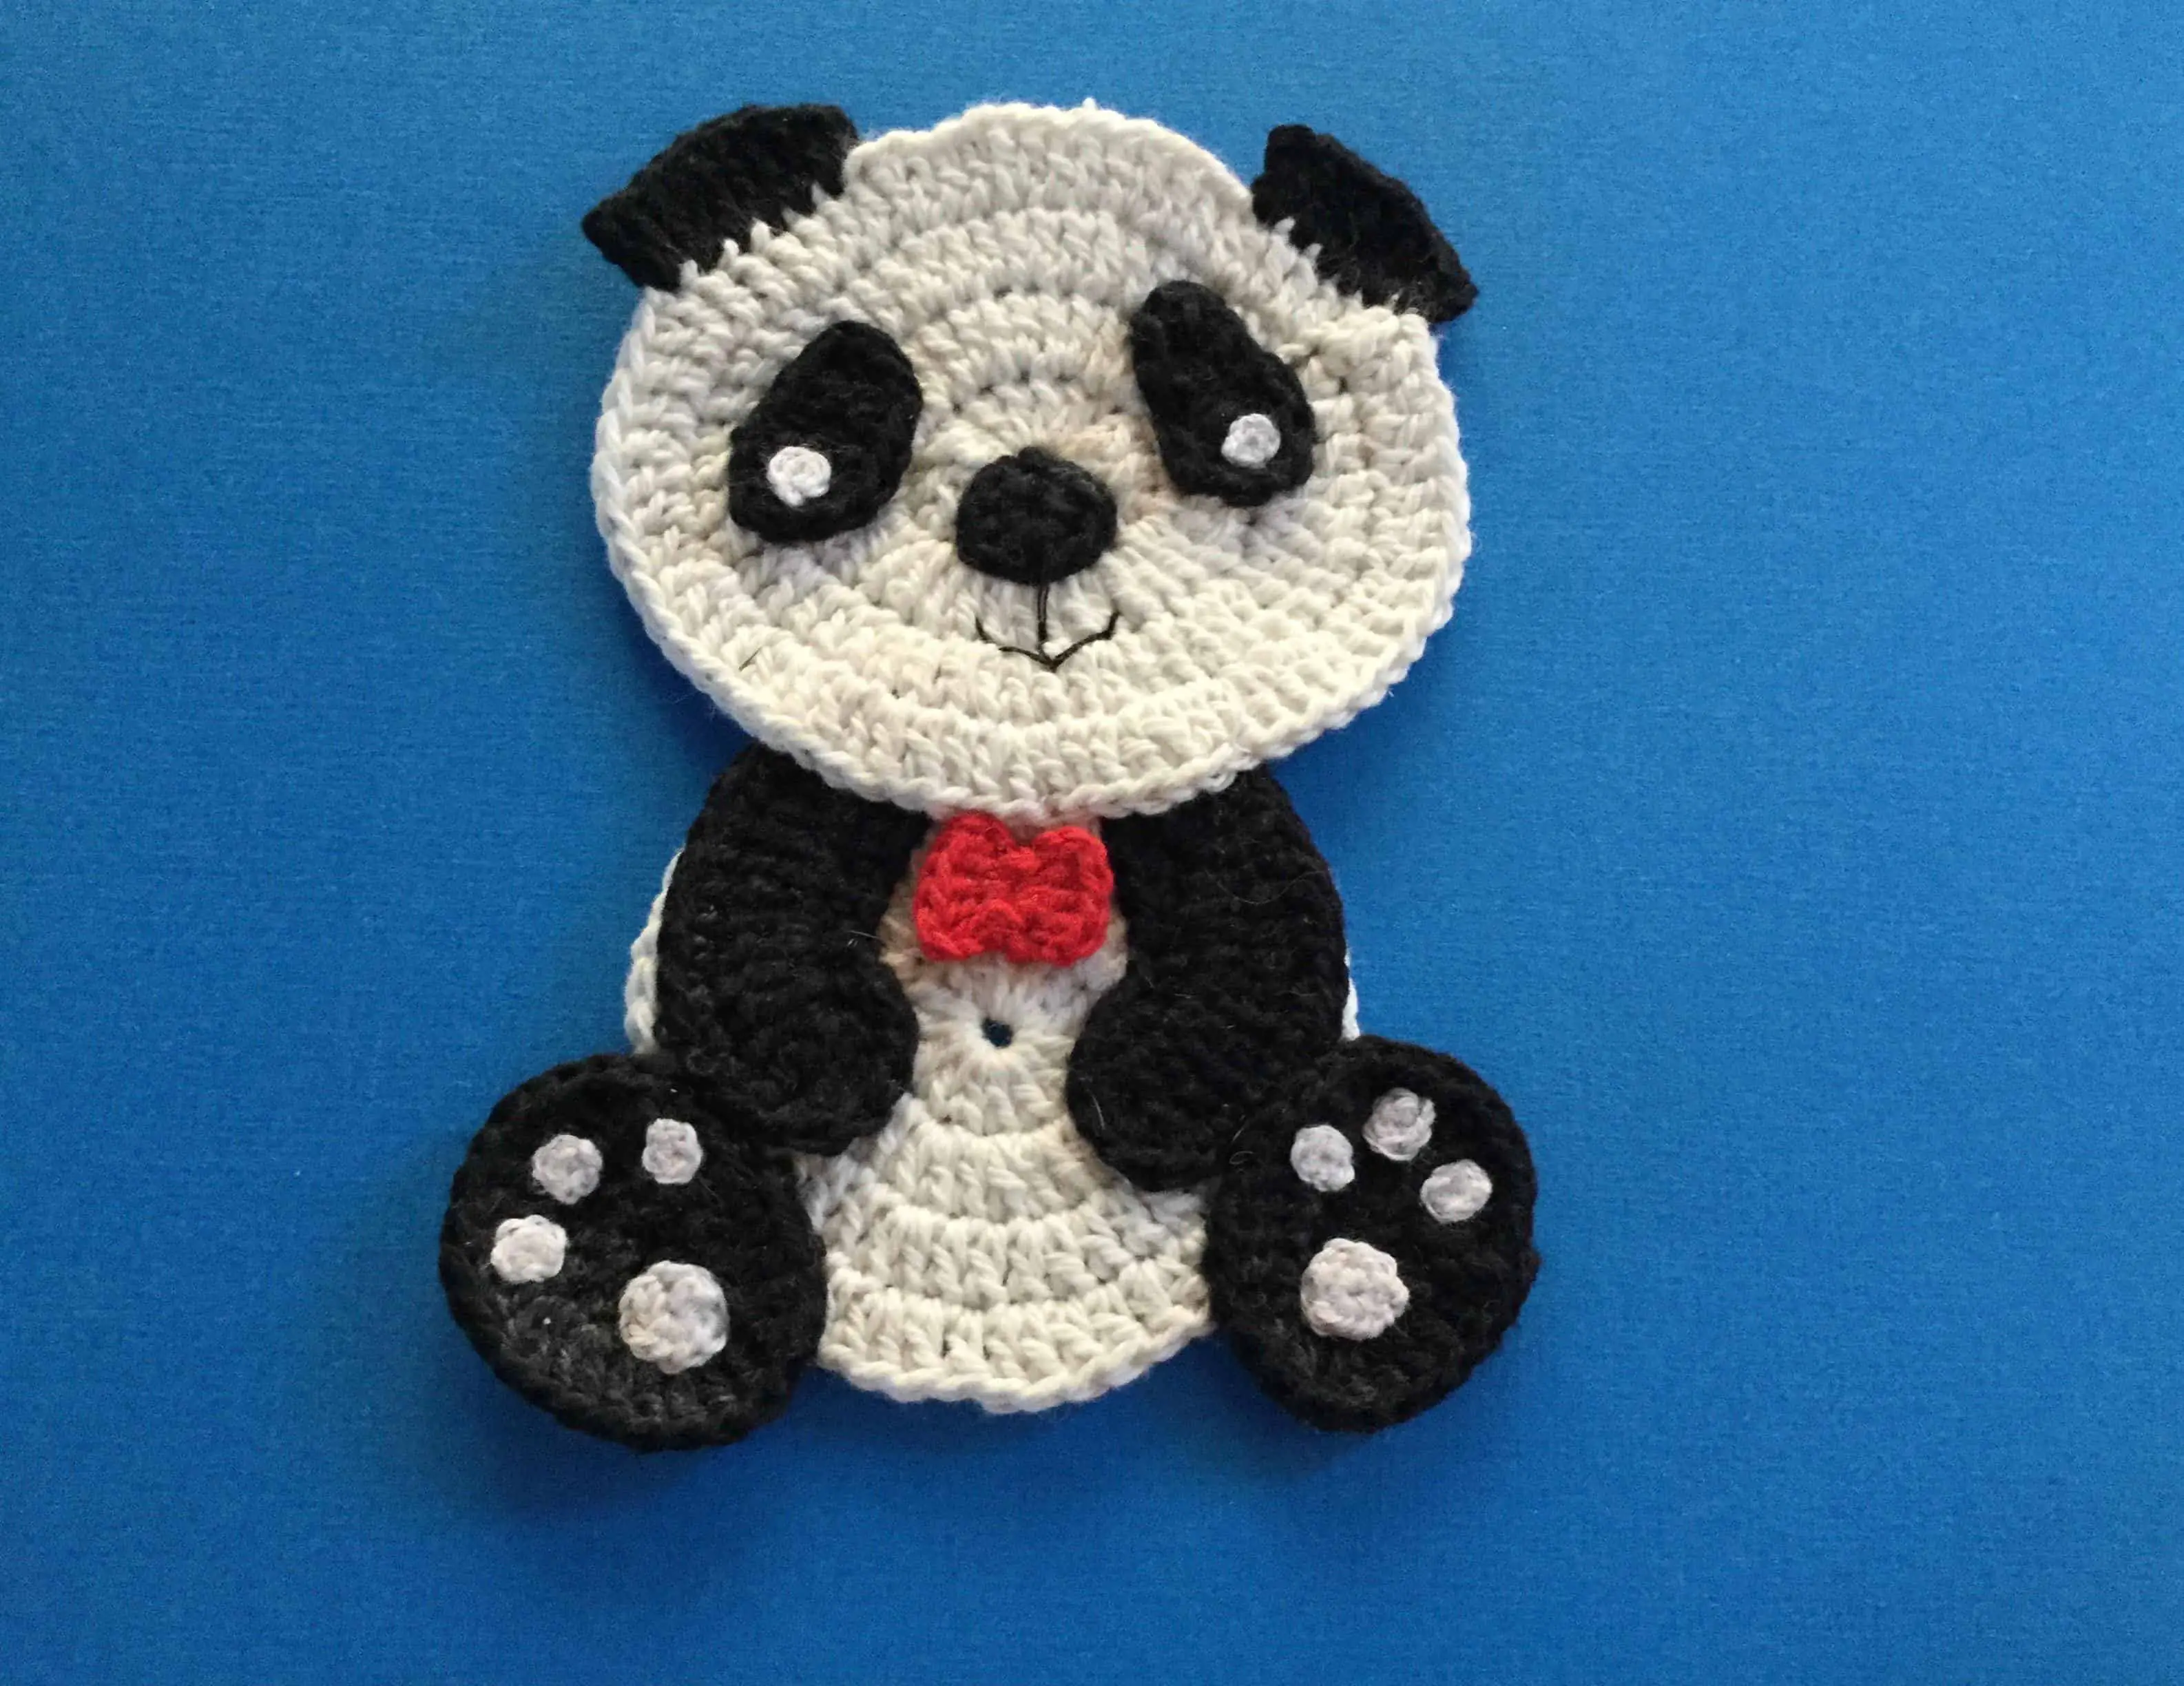 Finished crochet panda with bowtie landscape